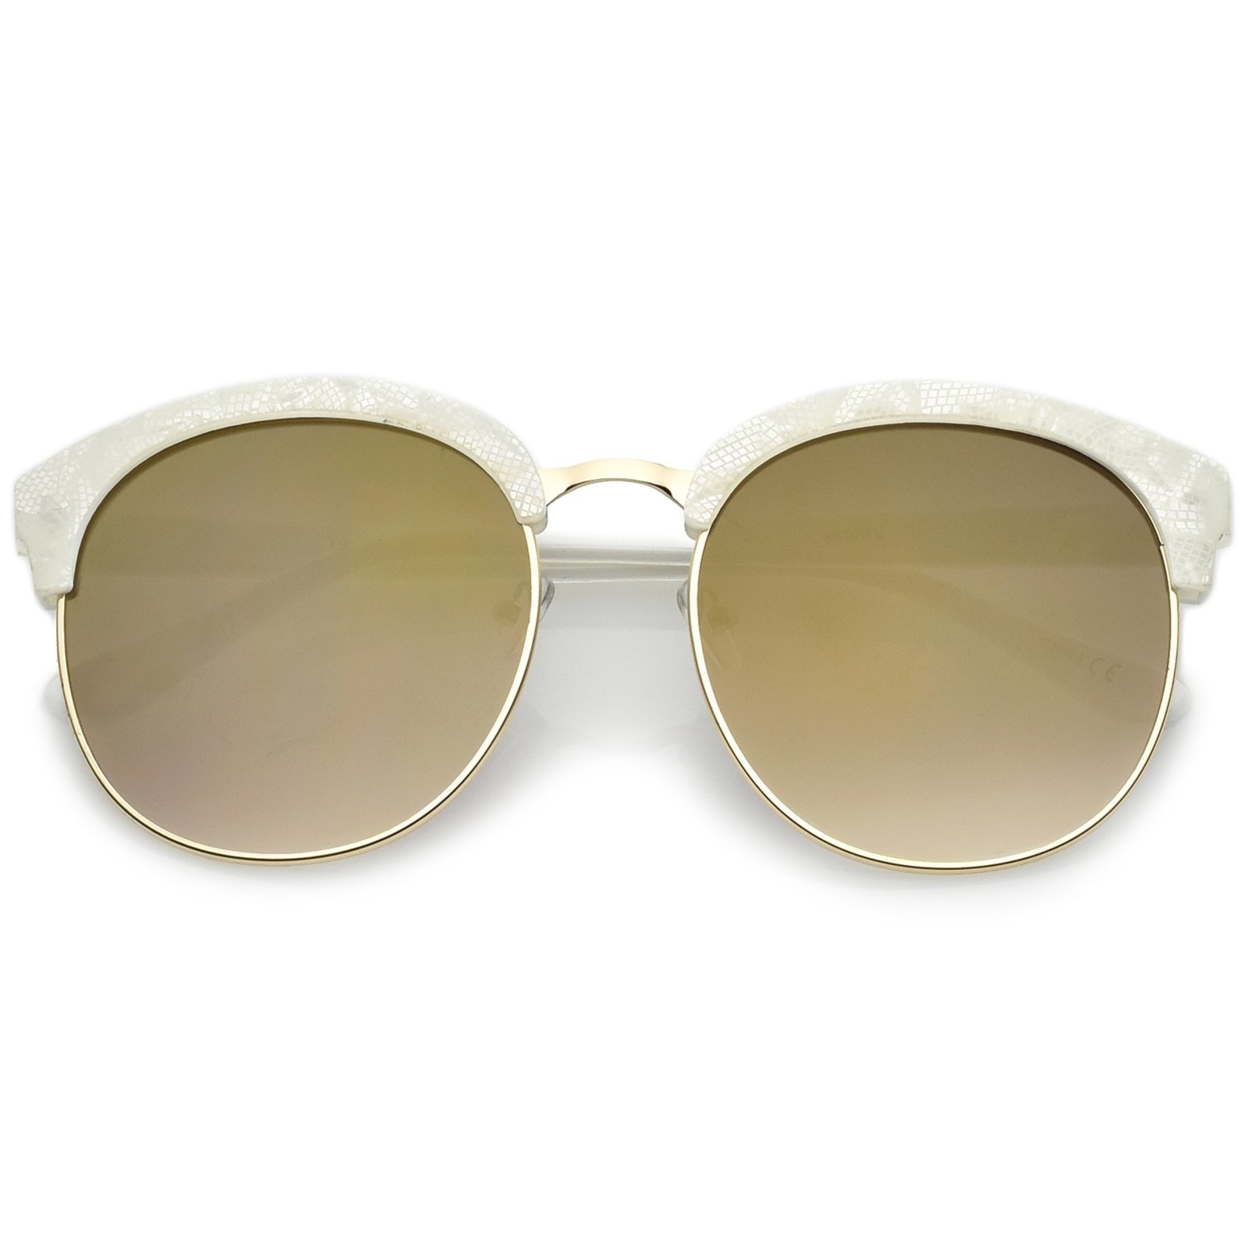 Oversize Metallic Horn Rimmed Colored Mirror Lens Half-Frame Sunglasses 58mm - White Gold / Lavender Mirror